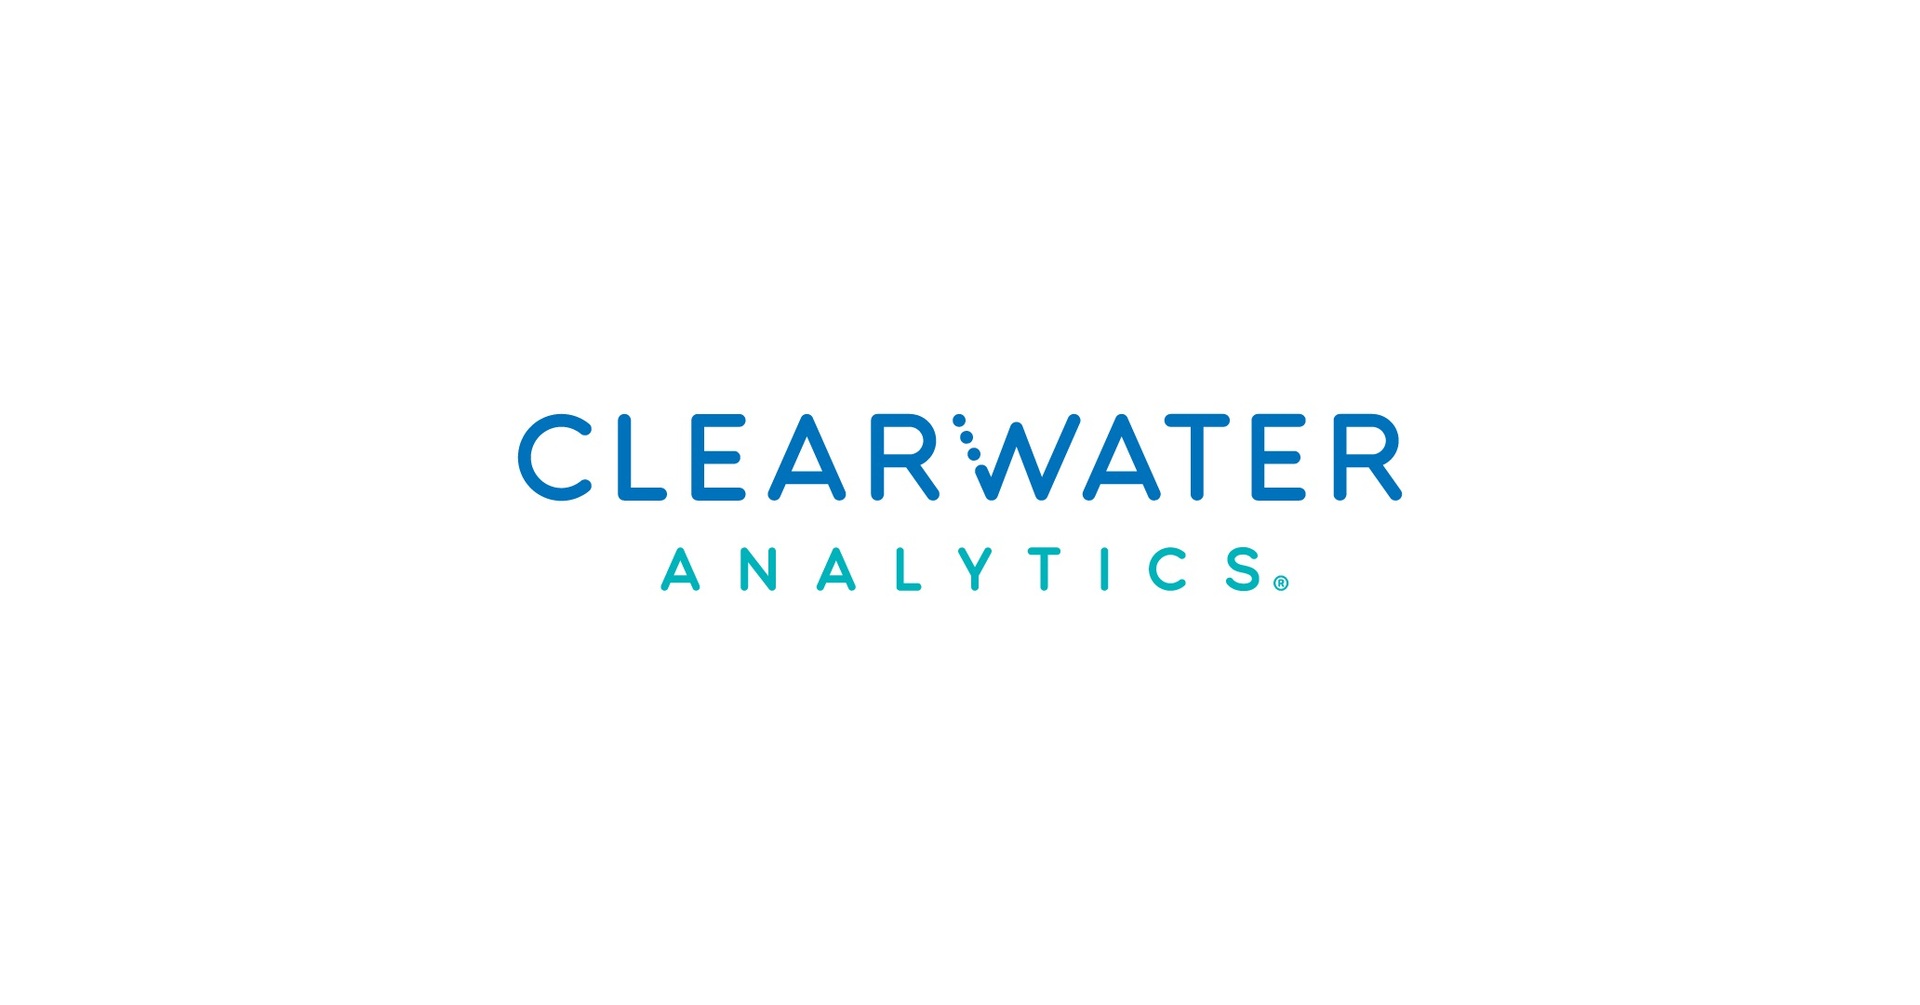 Erste资产管理公司选择Clearwater Analytics为这些活动提供羊角面包